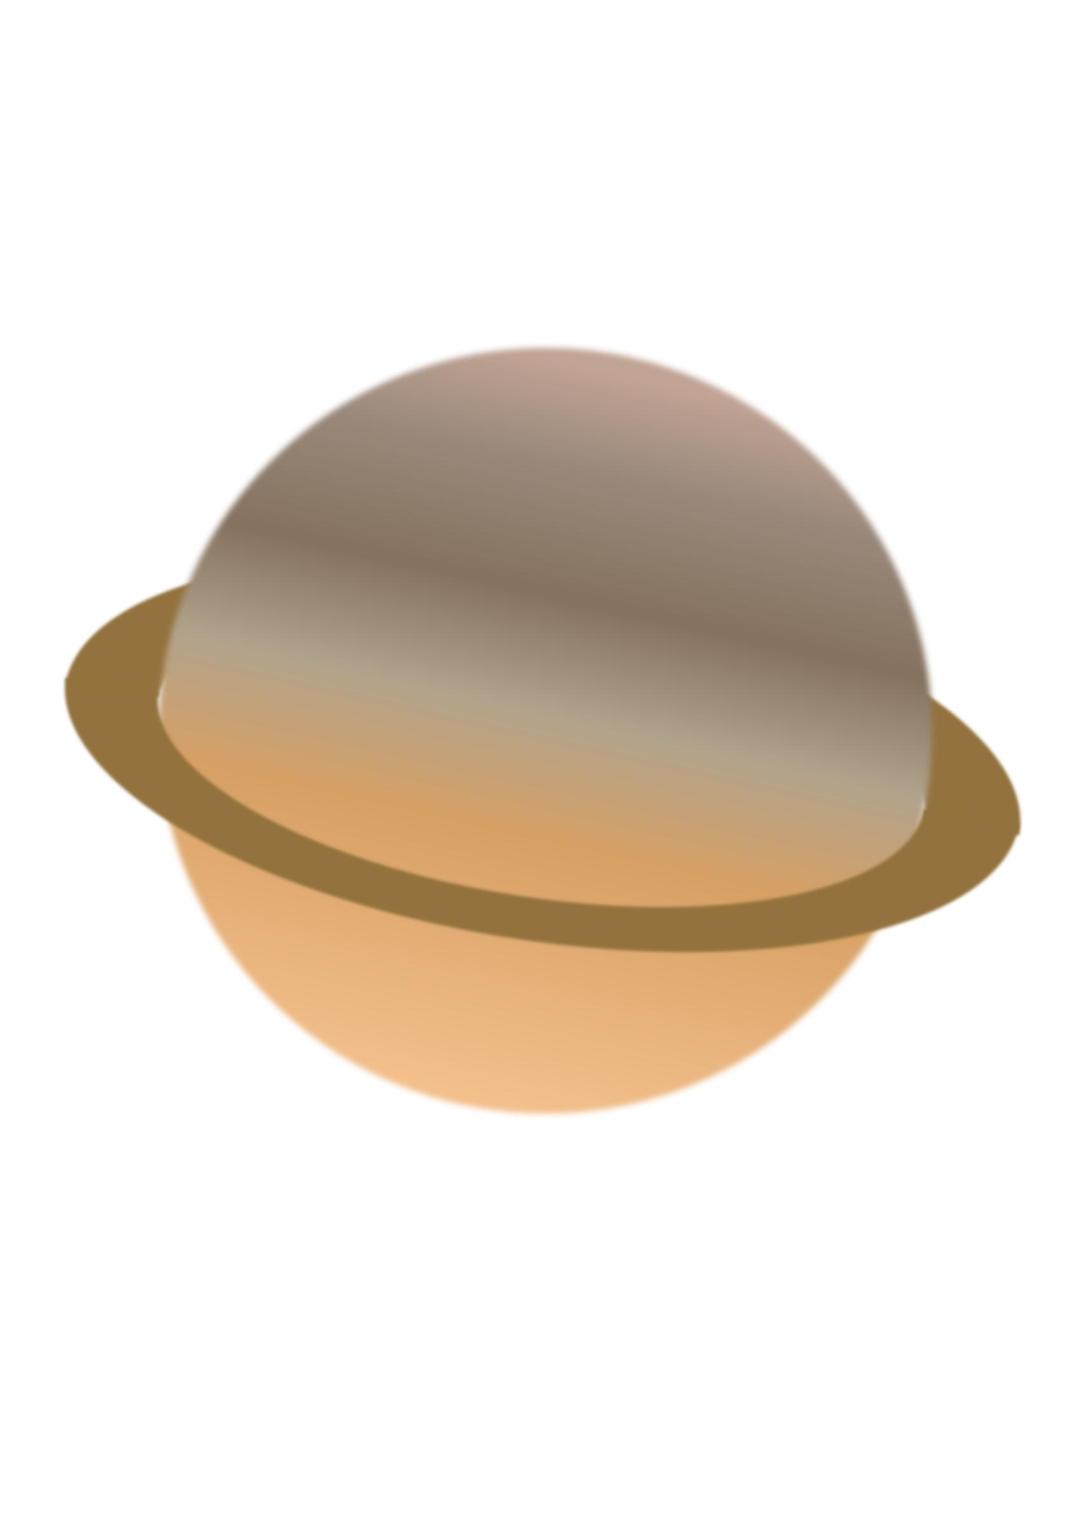 Saturn, Saturno png transparent